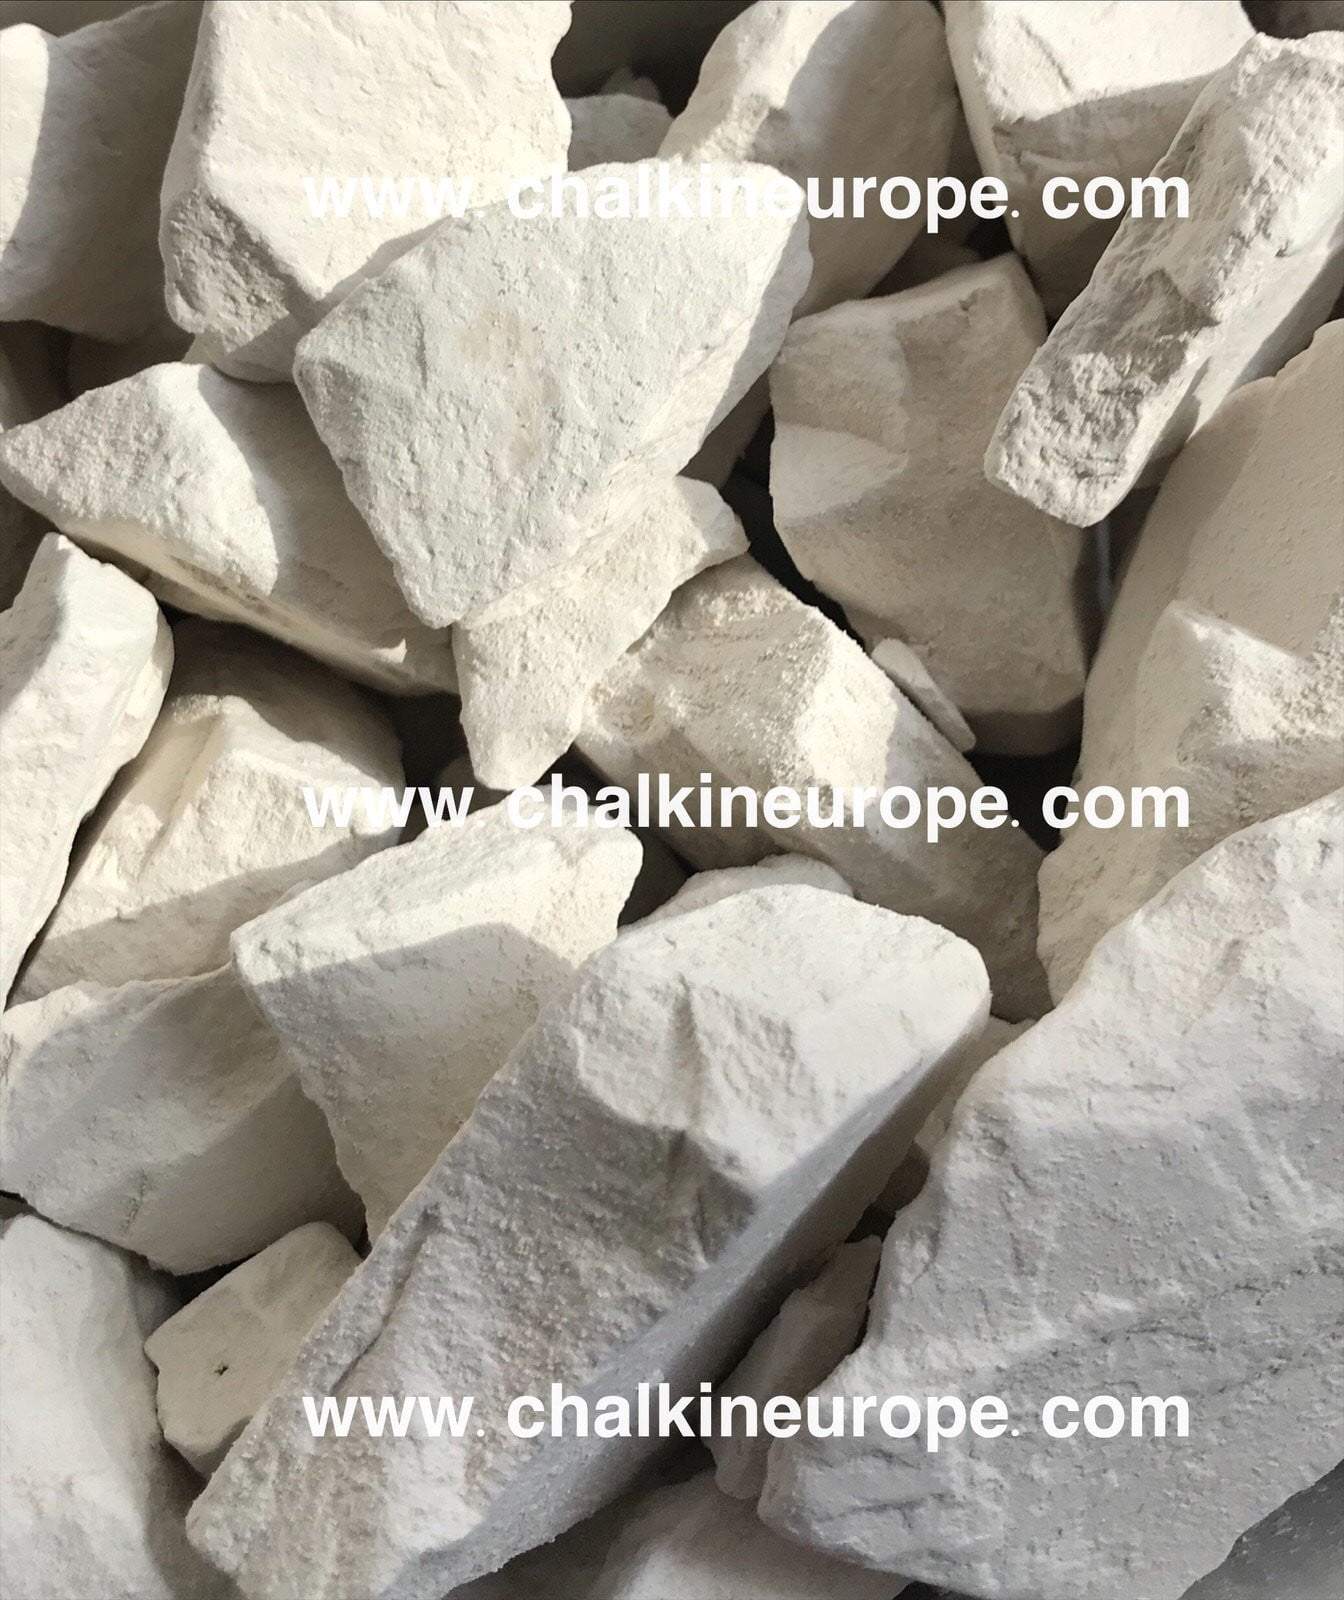 Hard White Clay - Chalkineurope